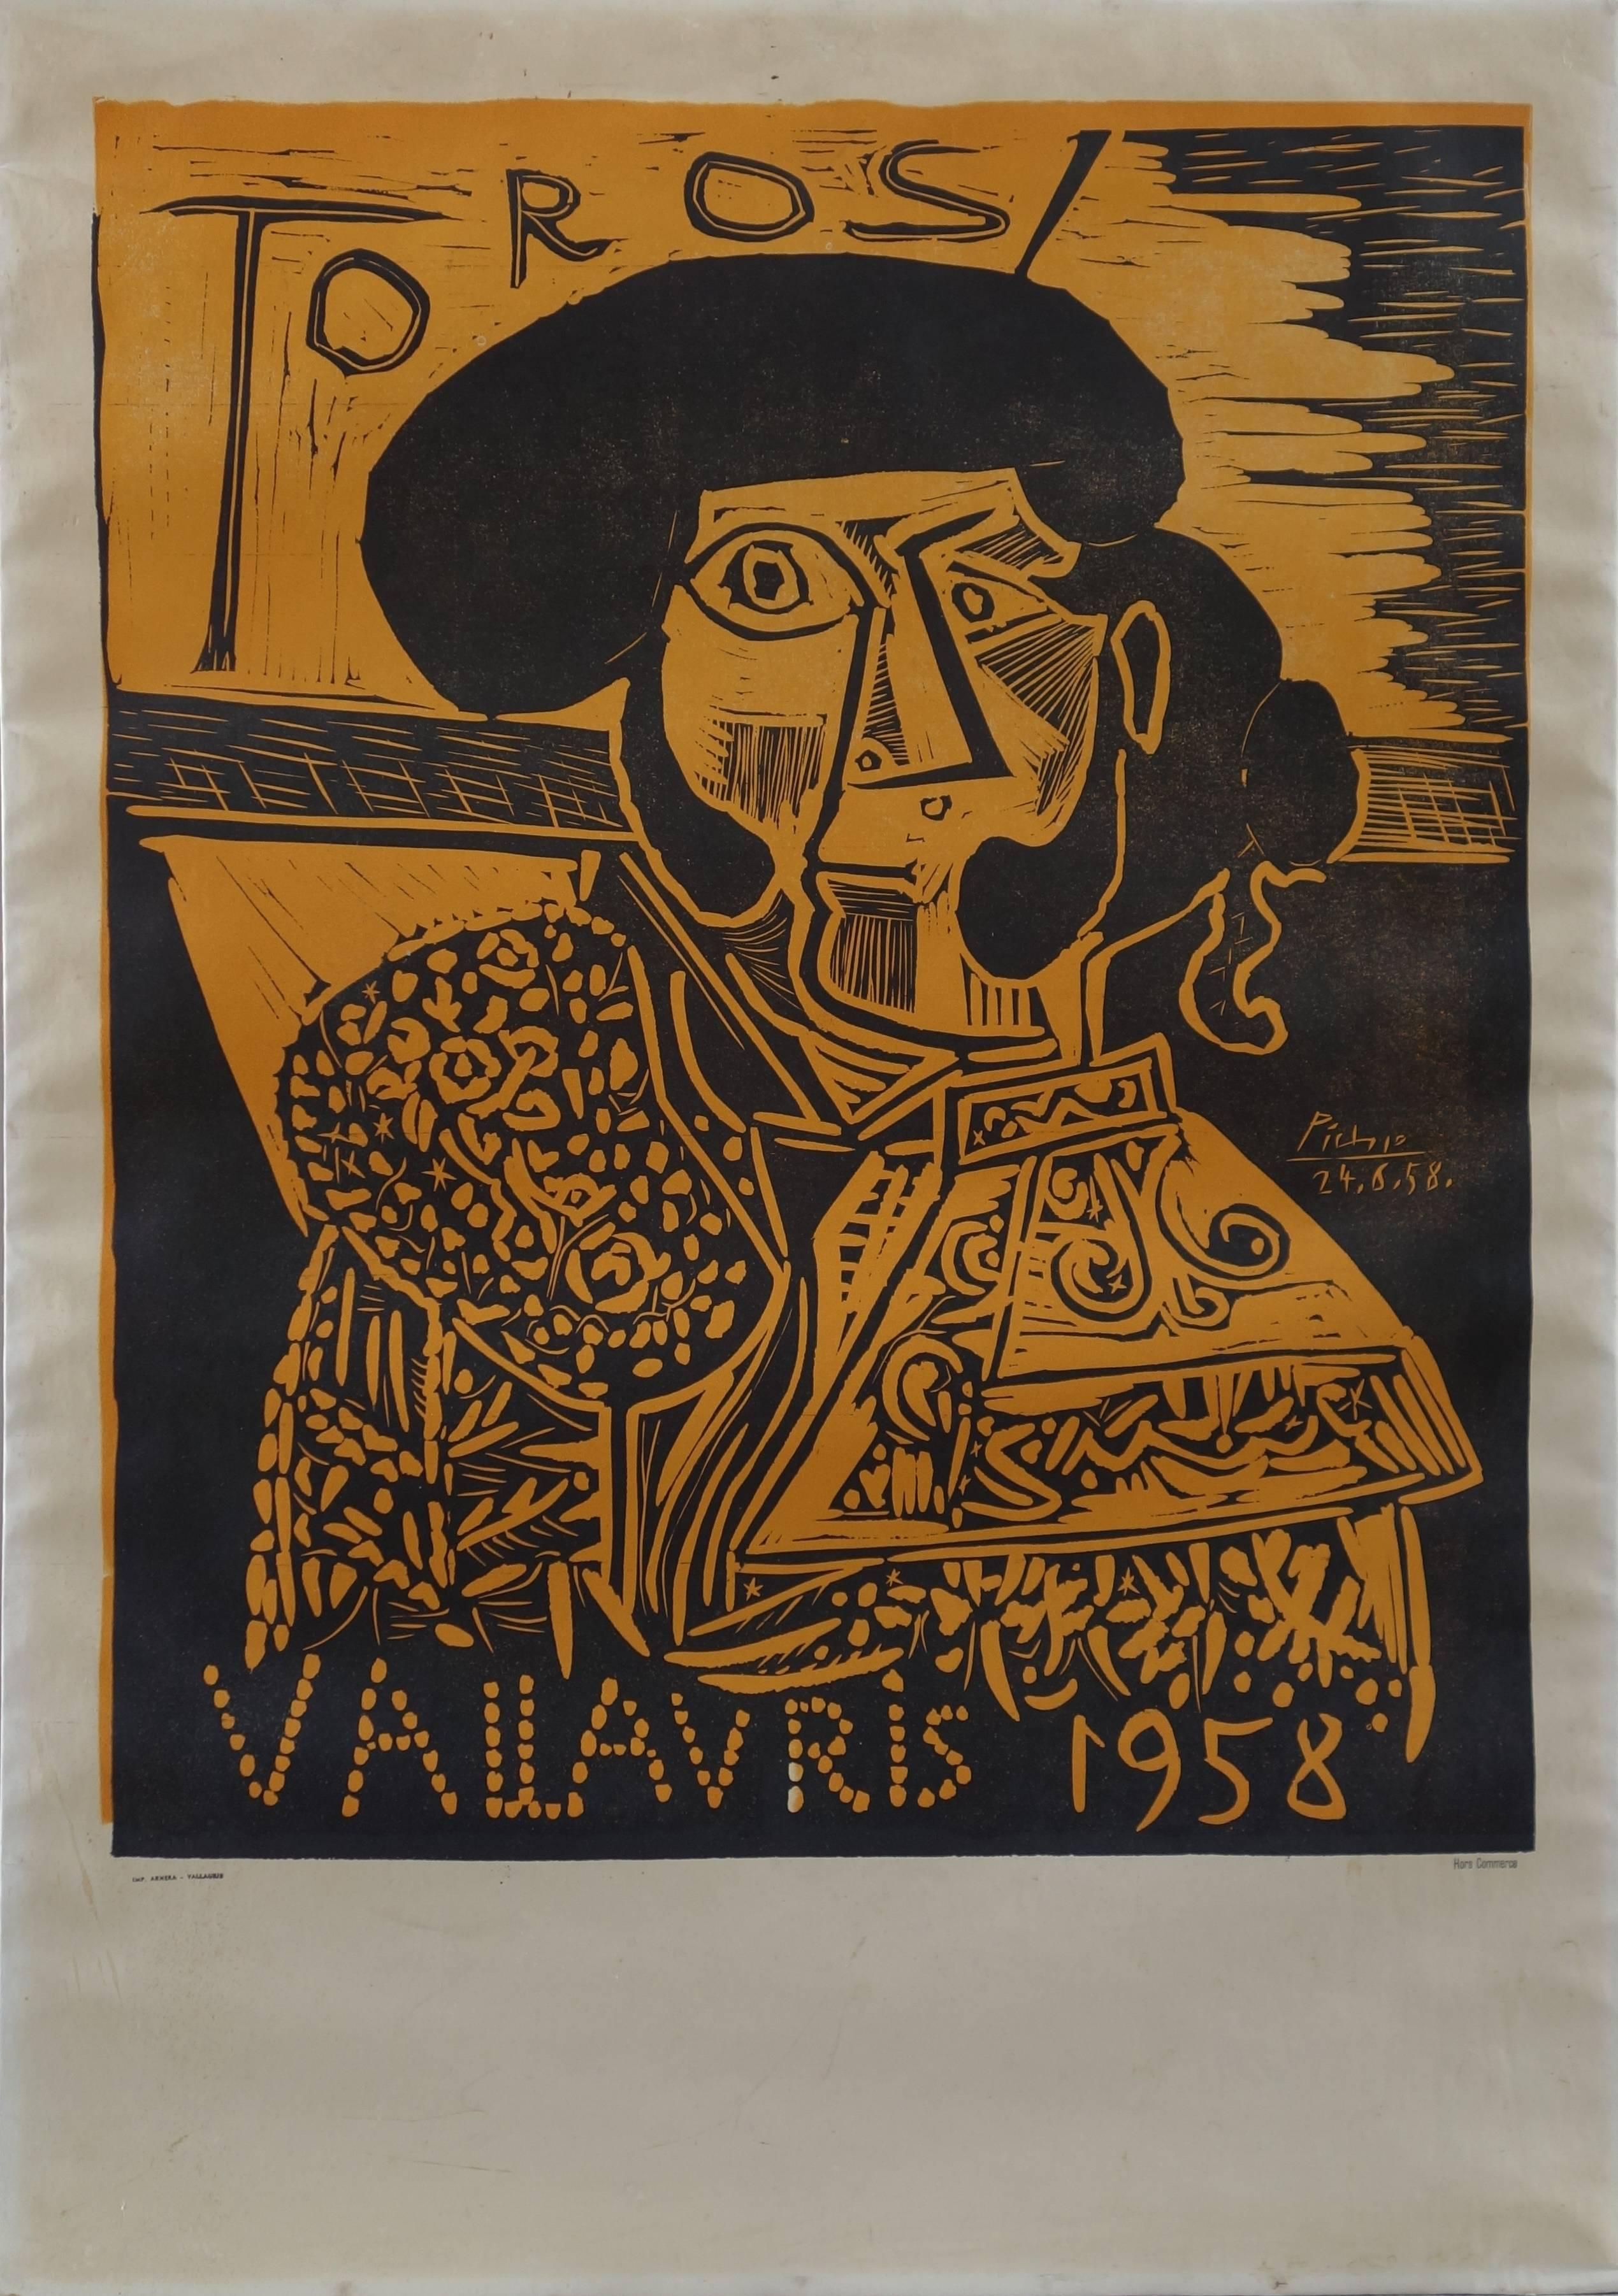 Pablo Picasso Portrait Print - Toros Vallauris 1958 - Tall linocut - Ref. Bloch #1282